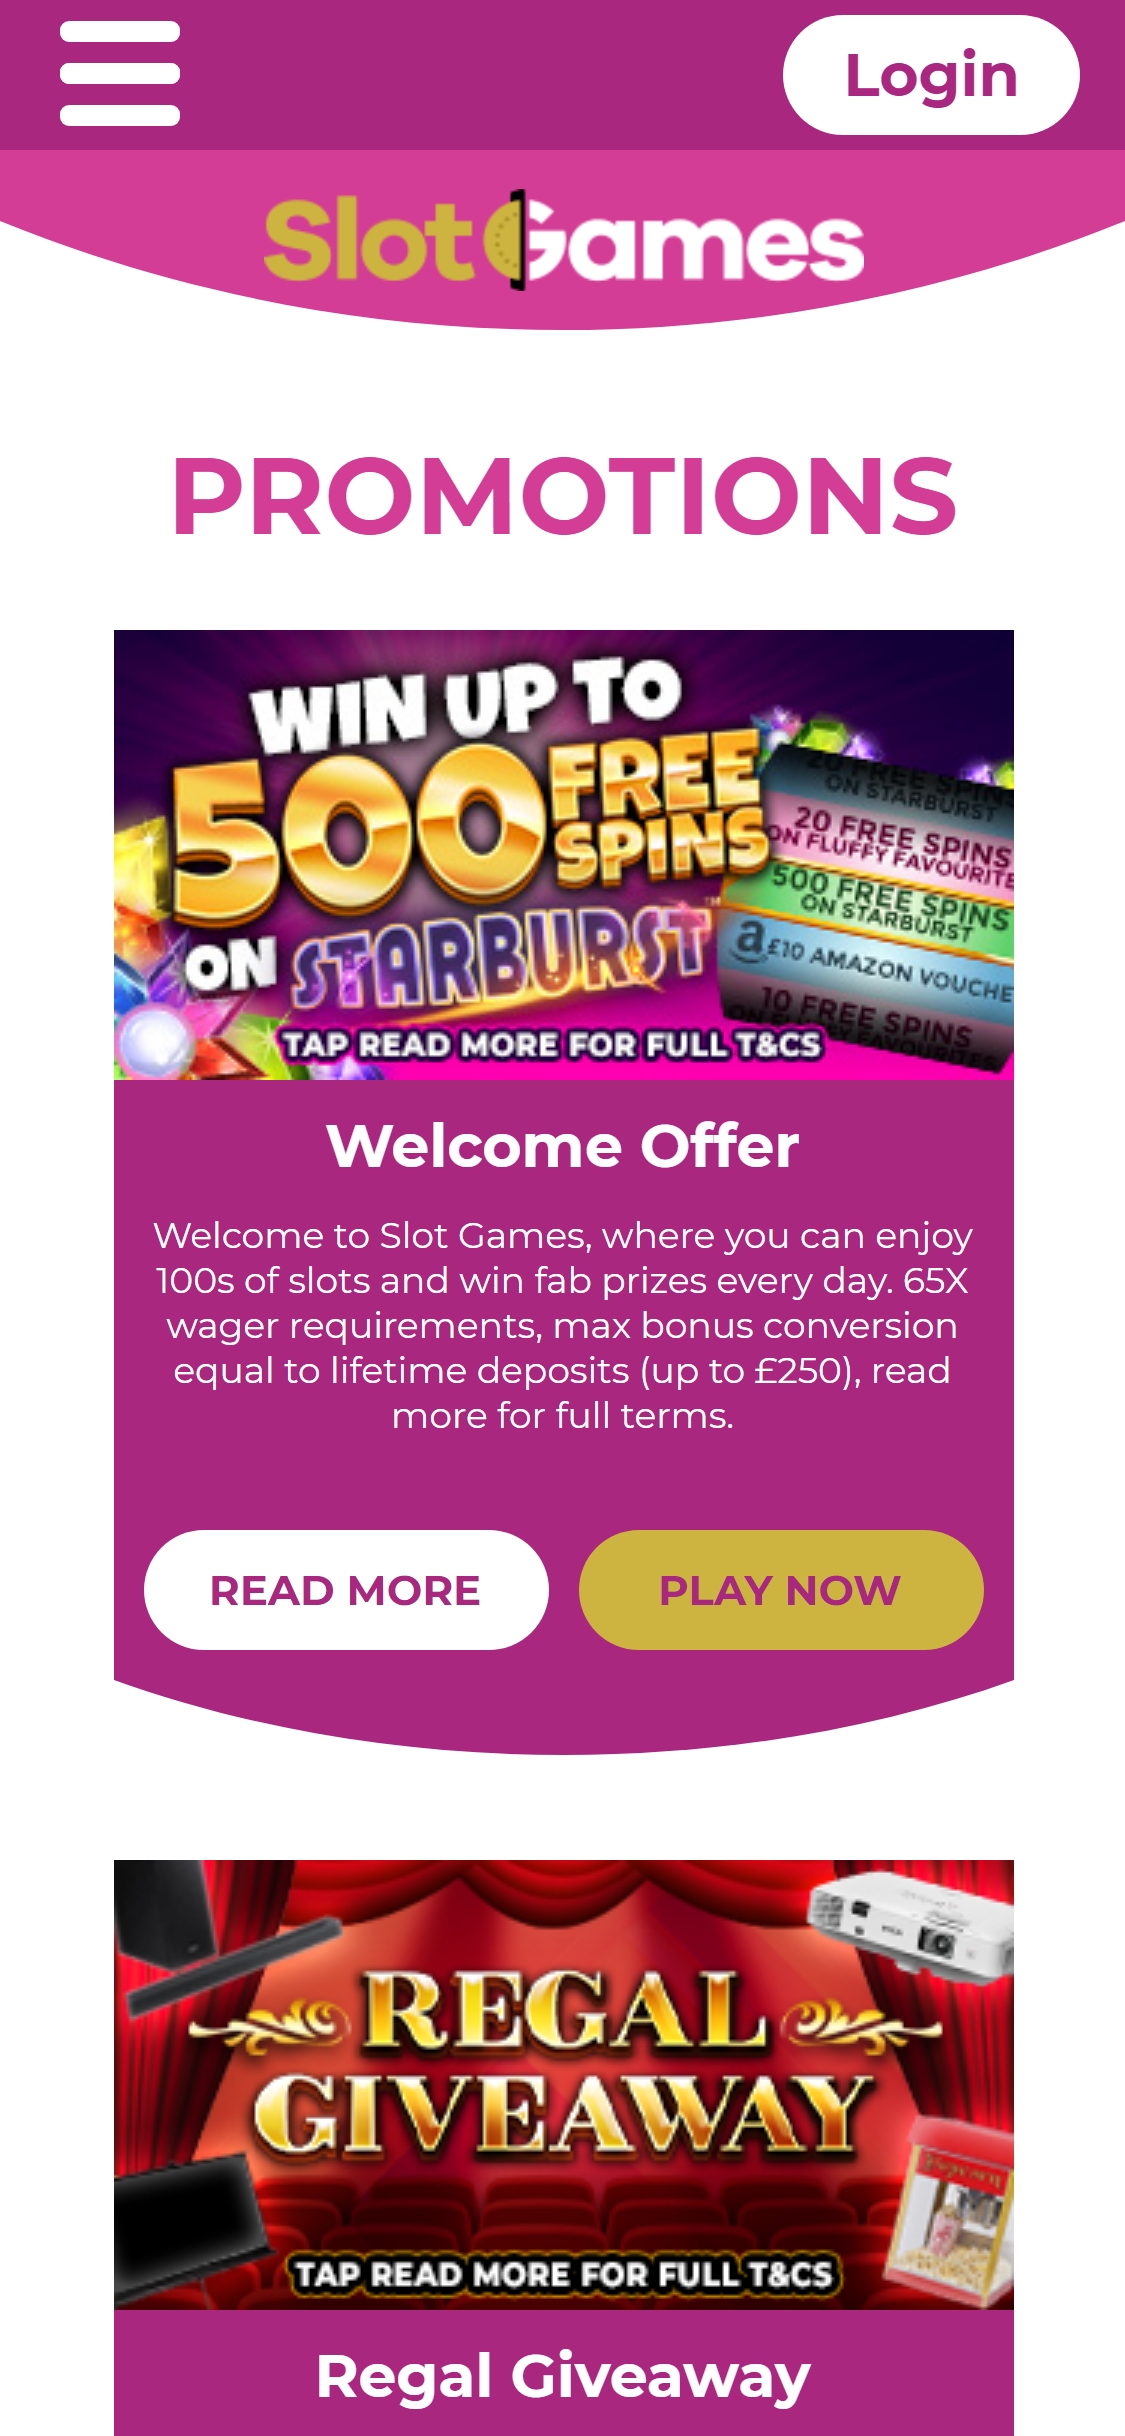 Slot Games Casino Mobile No Deposit Bonus Review